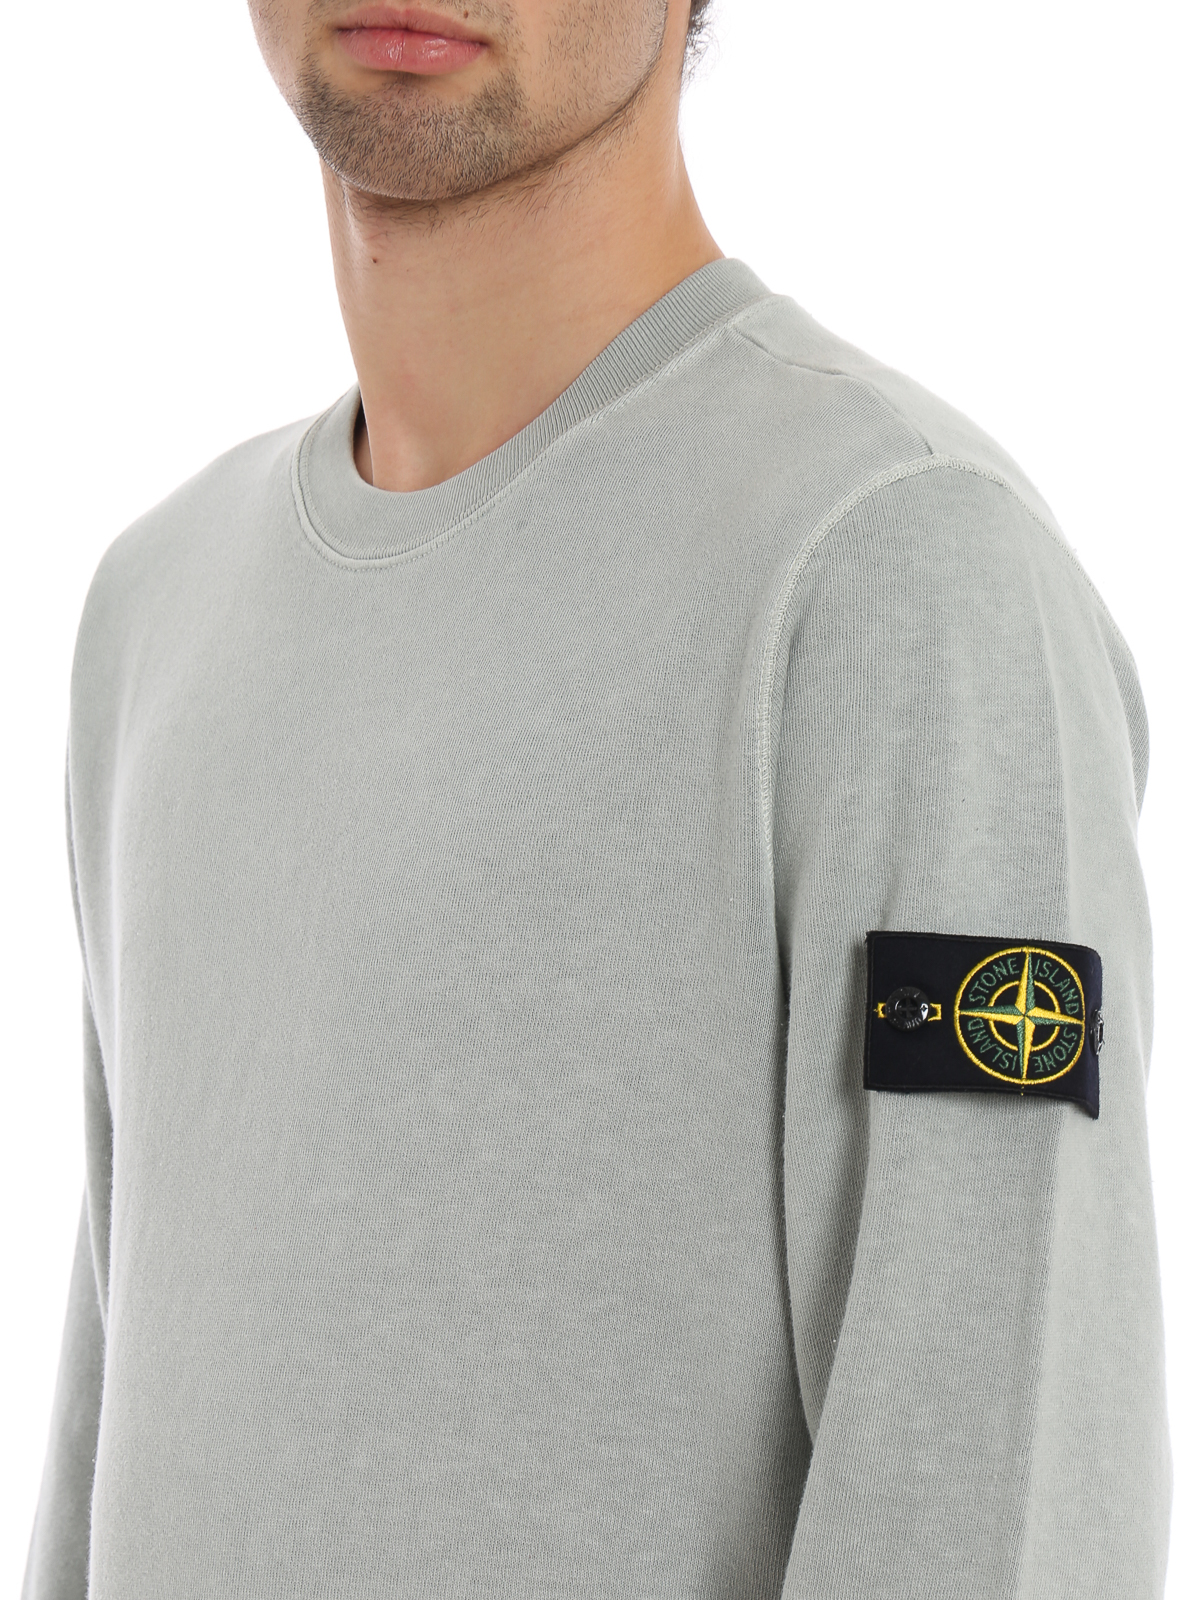 Apparatet Skylight Crack pot Sweatshirts & Sweaters Stone Island - Grey malfilé cotton sweatshirt -  701565560V0161